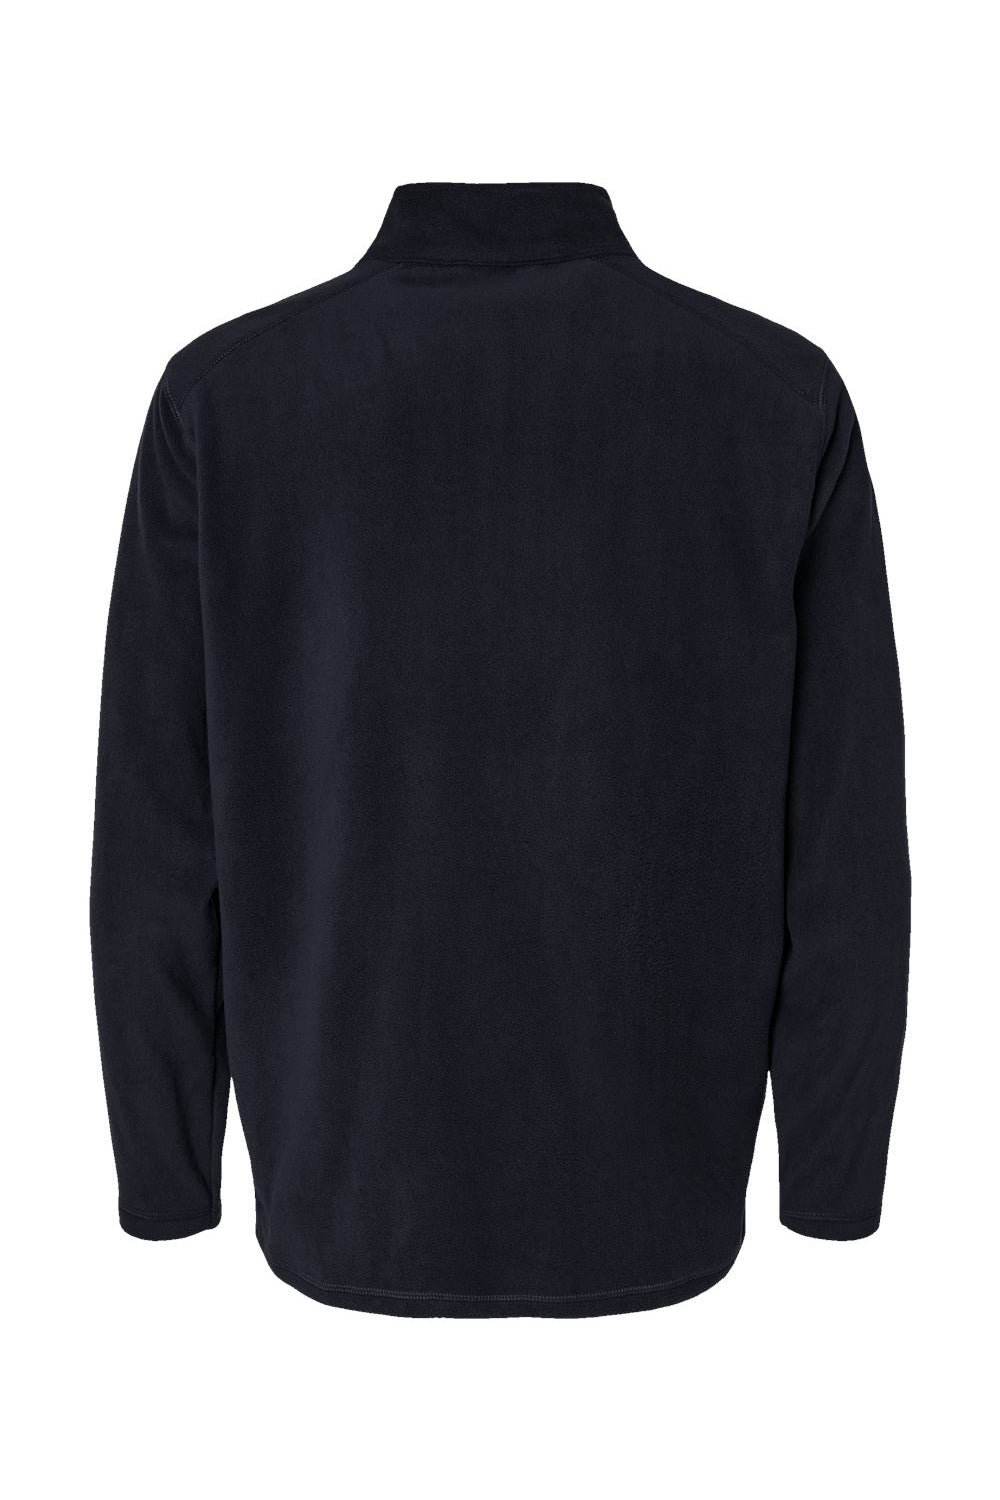 Augusta Sportswear 6863 Mens Eco Revive Micro Lite Fleece 1/4 Zip Pullover Black Flat Back